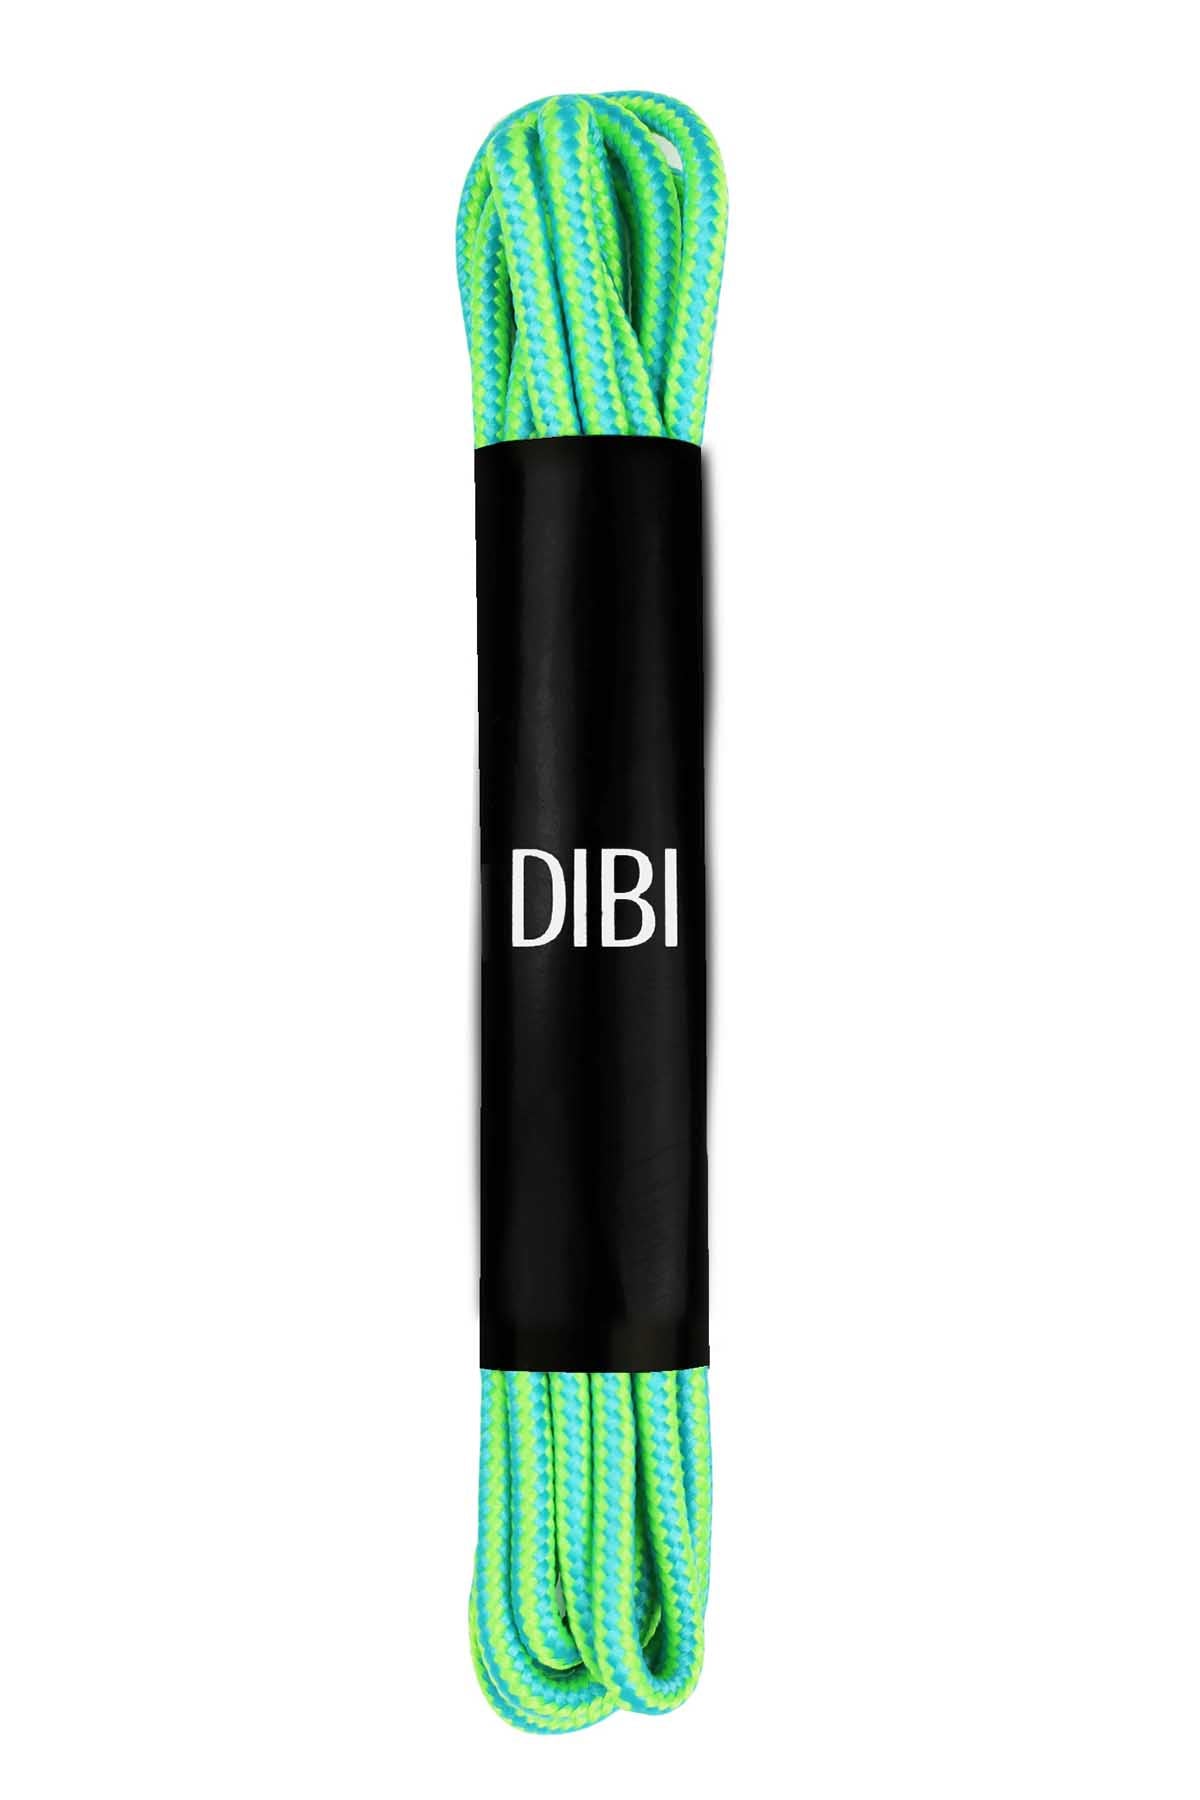 DIBI Bright-Green & Blue Dress Shoelaces w/ Gold Aglets